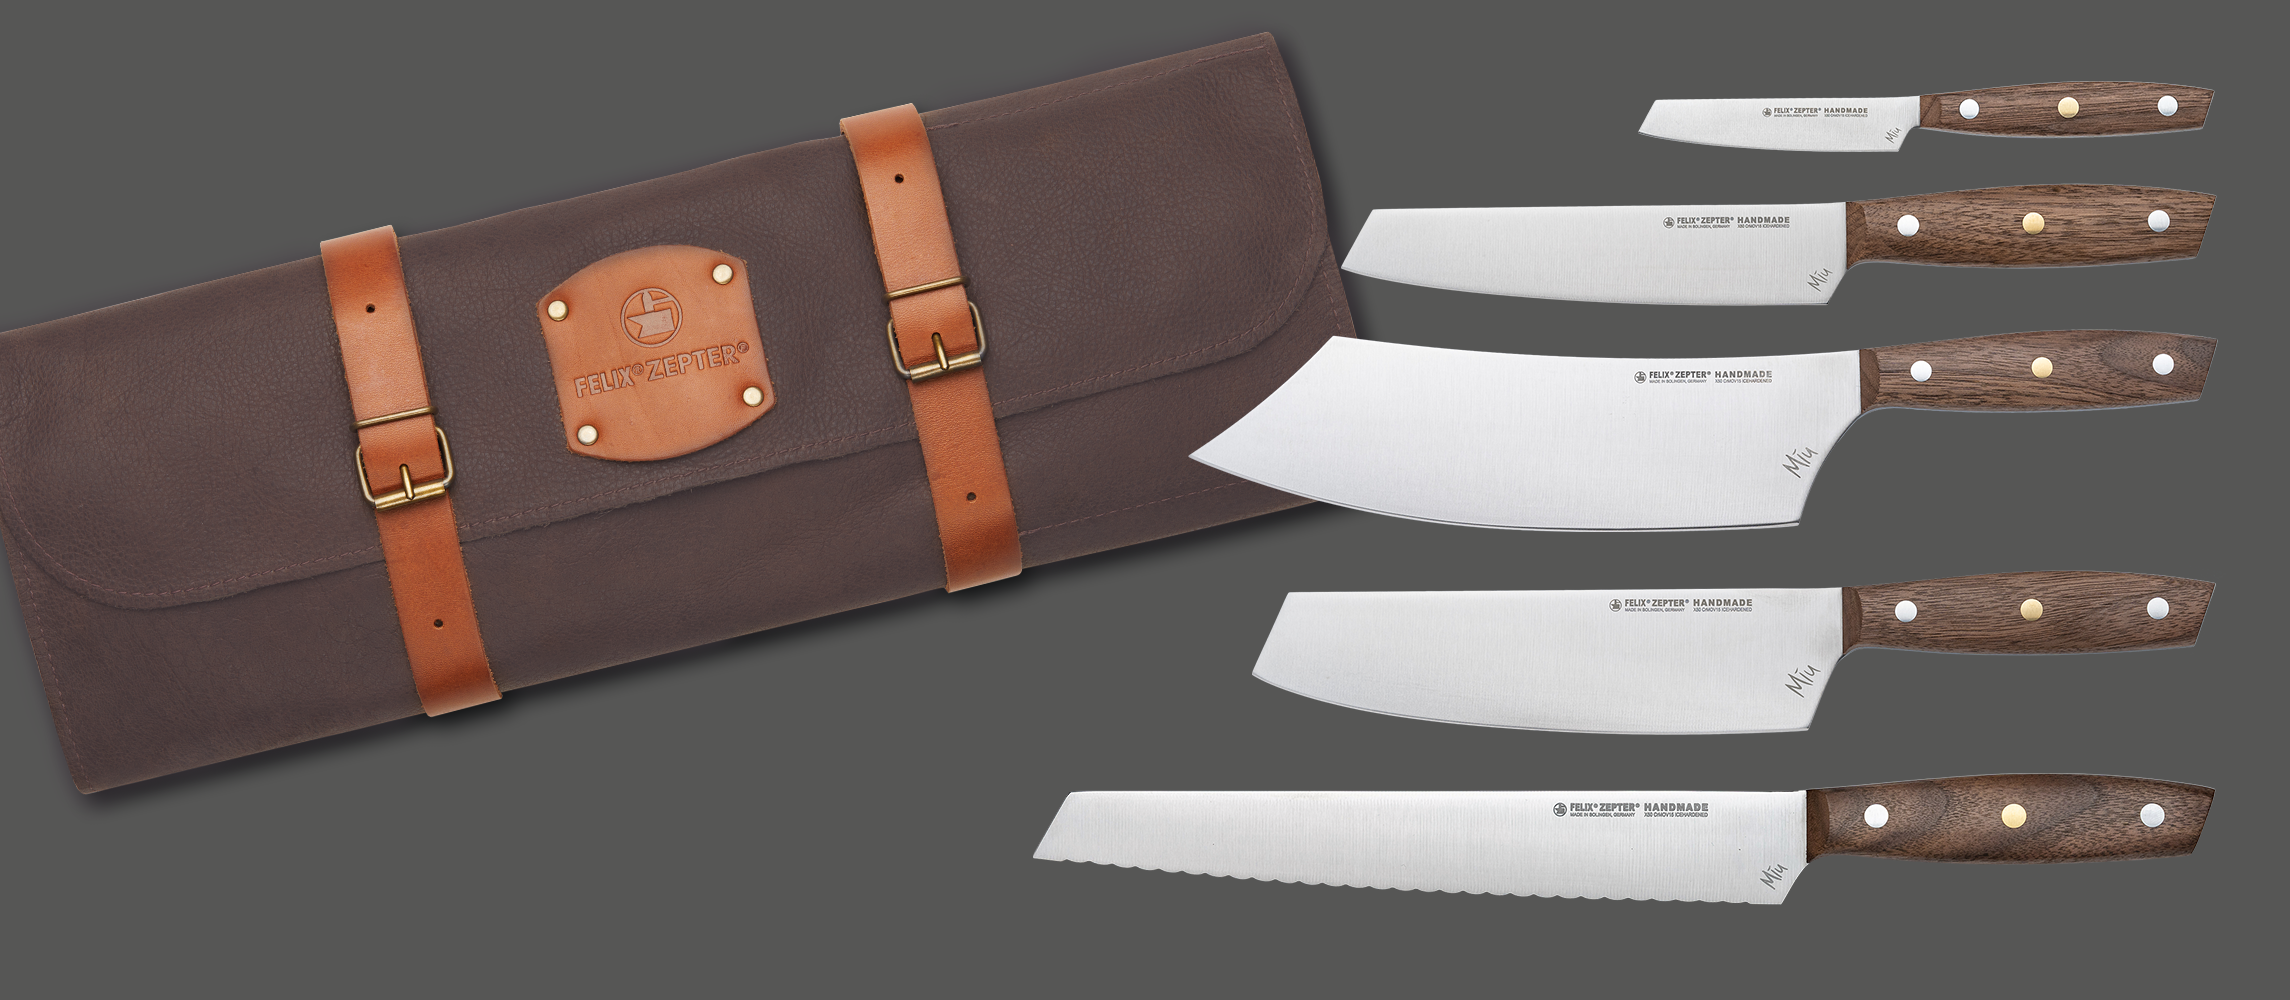 MIU knife leather bag incl. 5 knives